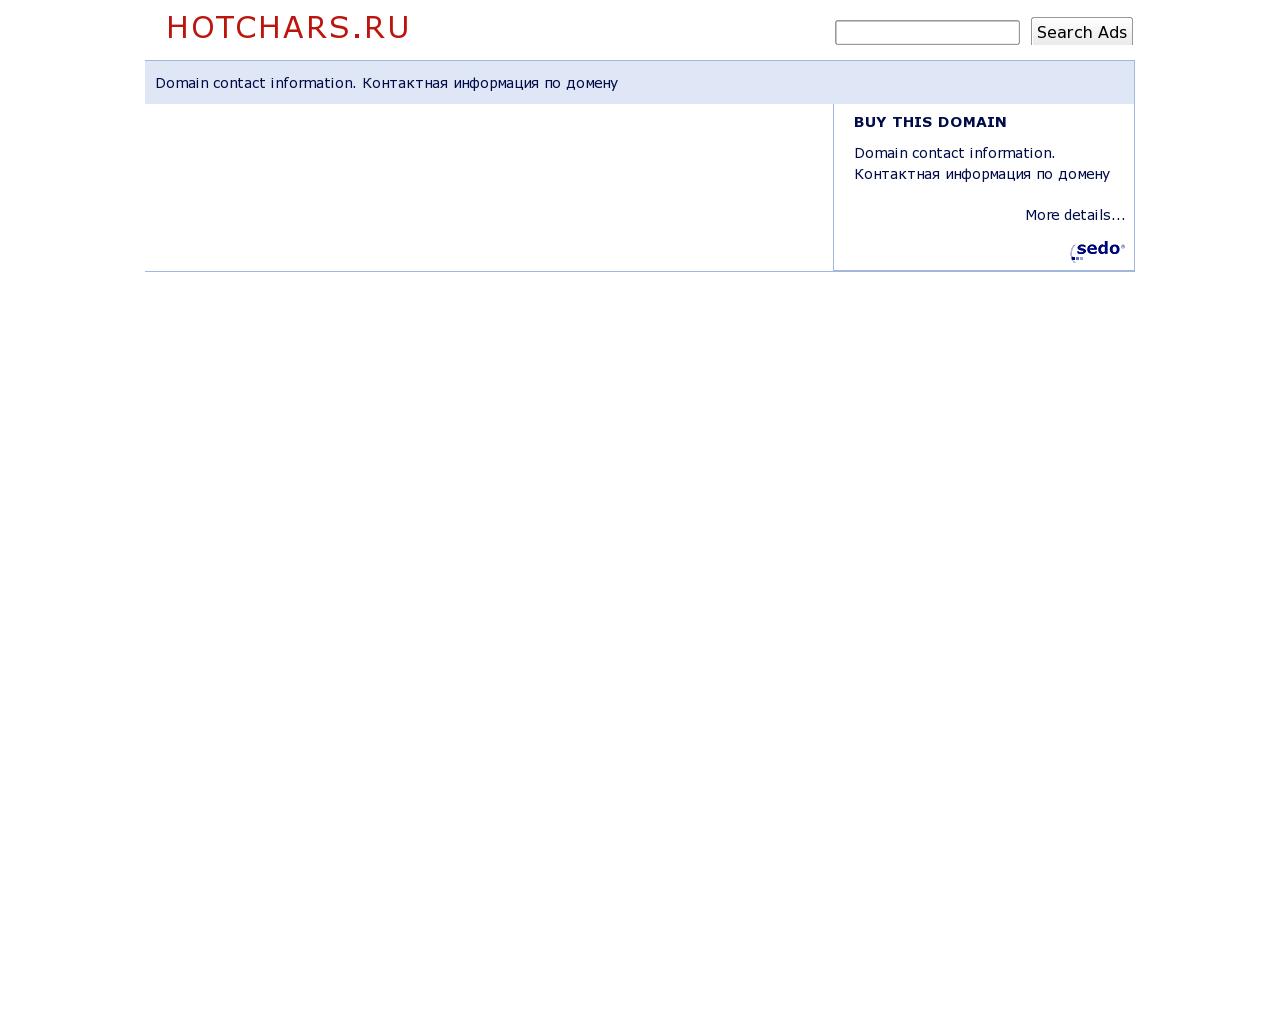 Изображение сайта hotchars.ru в разрешении 1280x1024